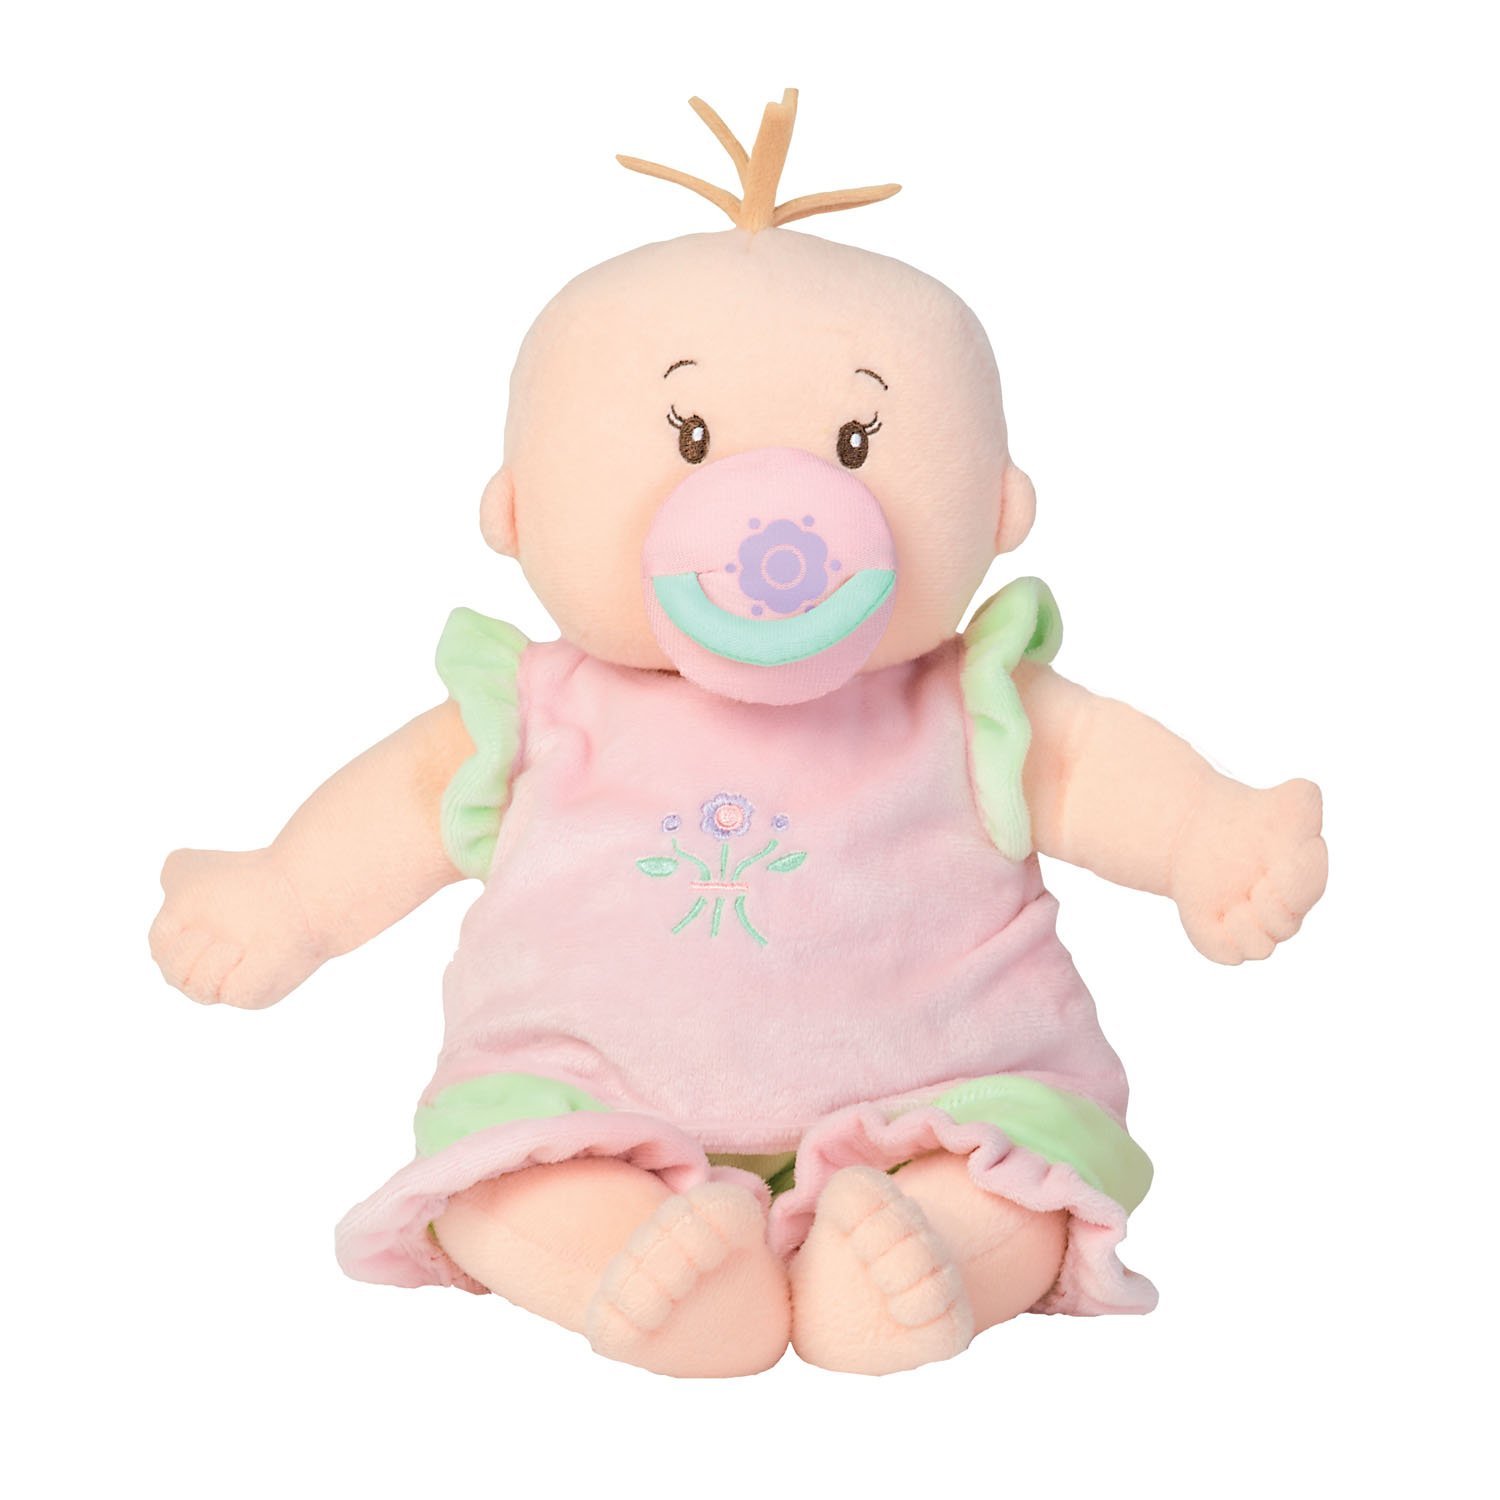 Búp bê bé trai sơ sinh Stella Peach Soft Nurturing First Baby Doll